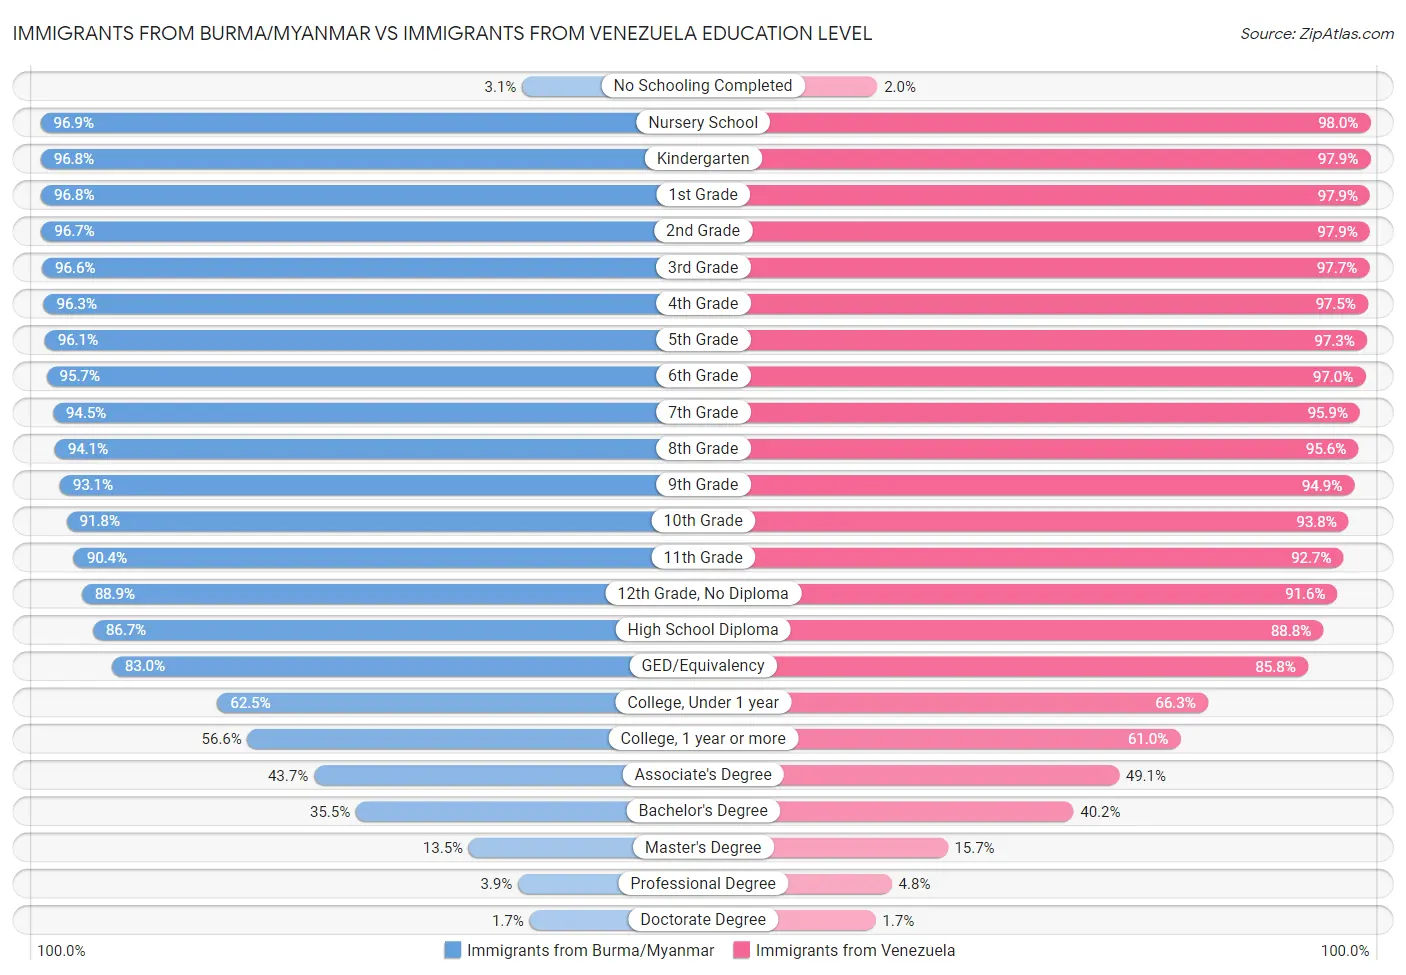 Immigrants from Burma/Myanmar vs Immigrants from Venezuela Education Level